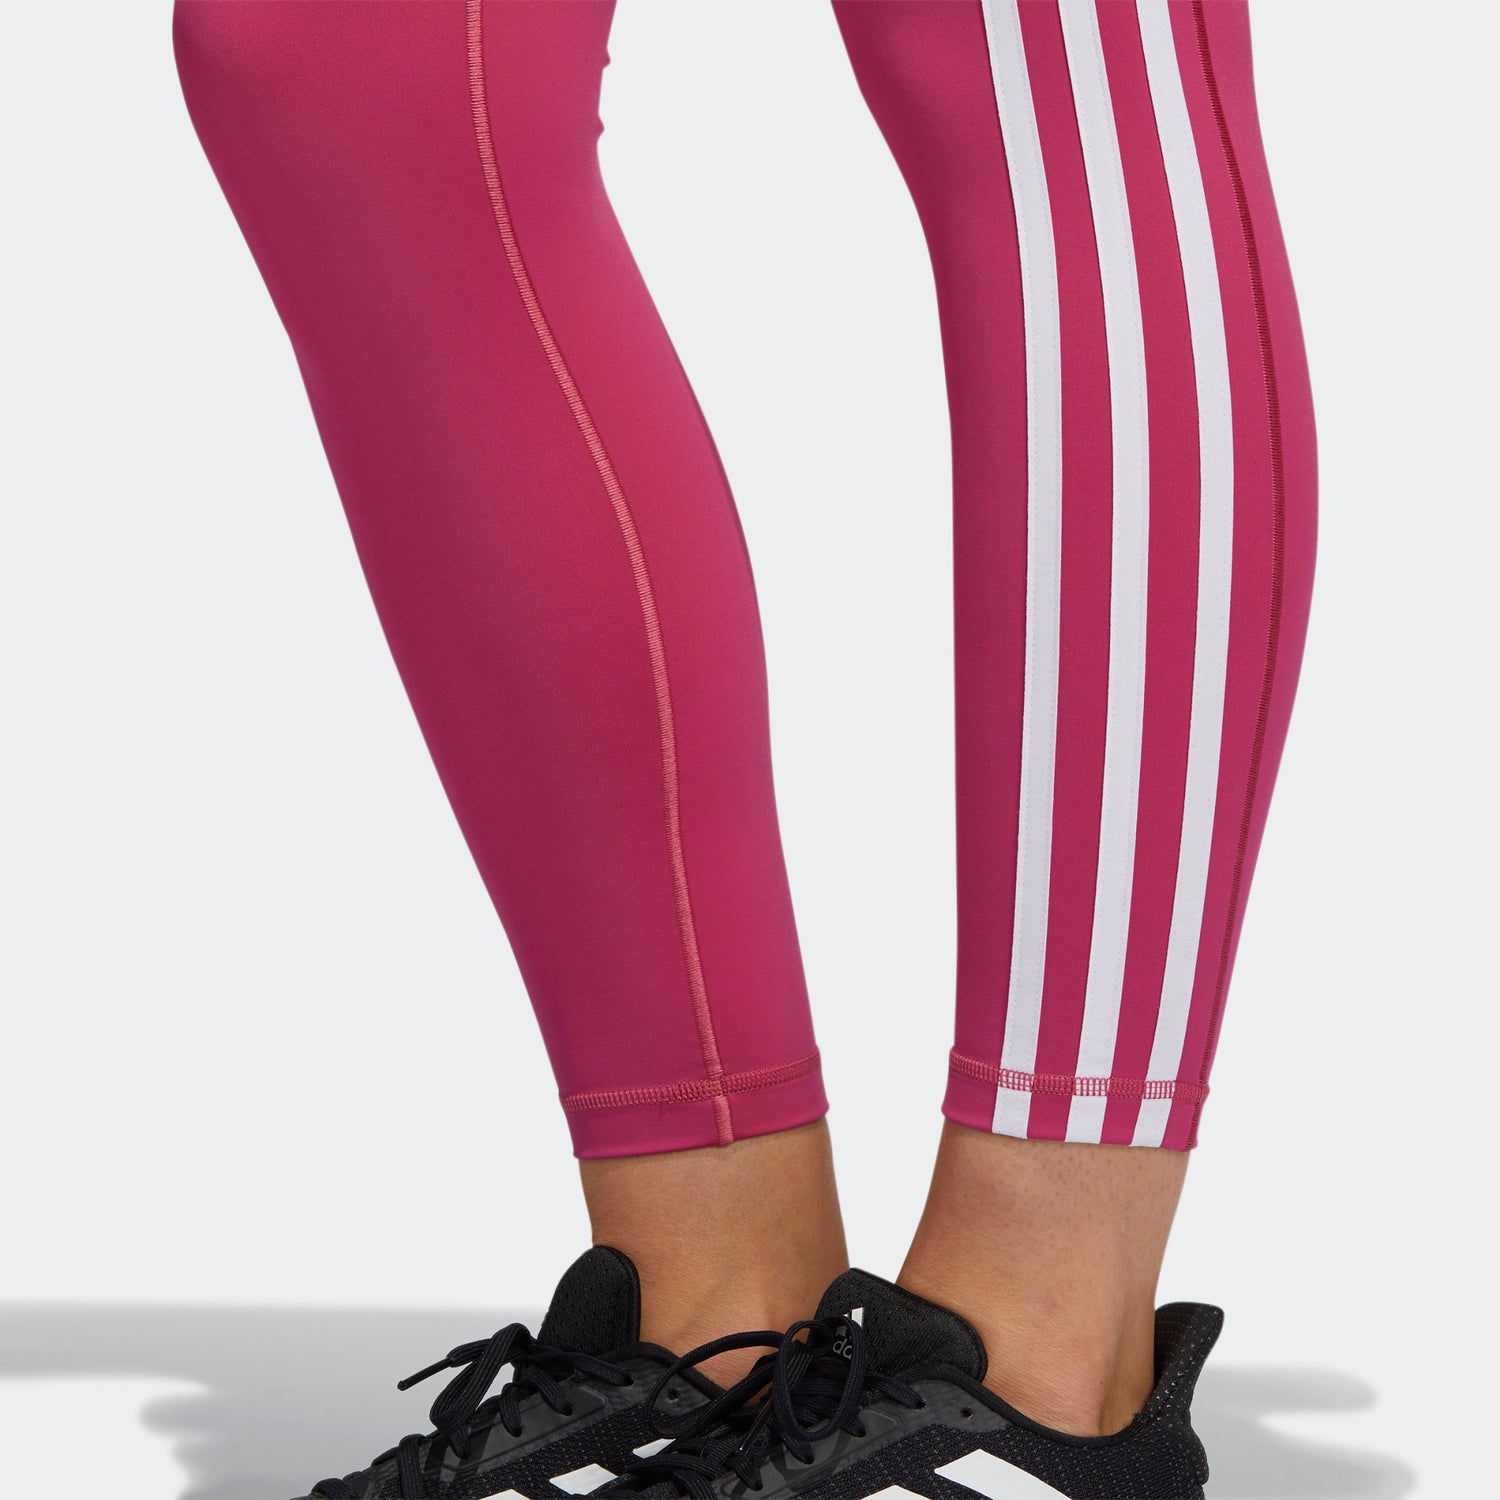 Adidas-F-Legging Tight Believe this 2.0 3-Stripes 7/8